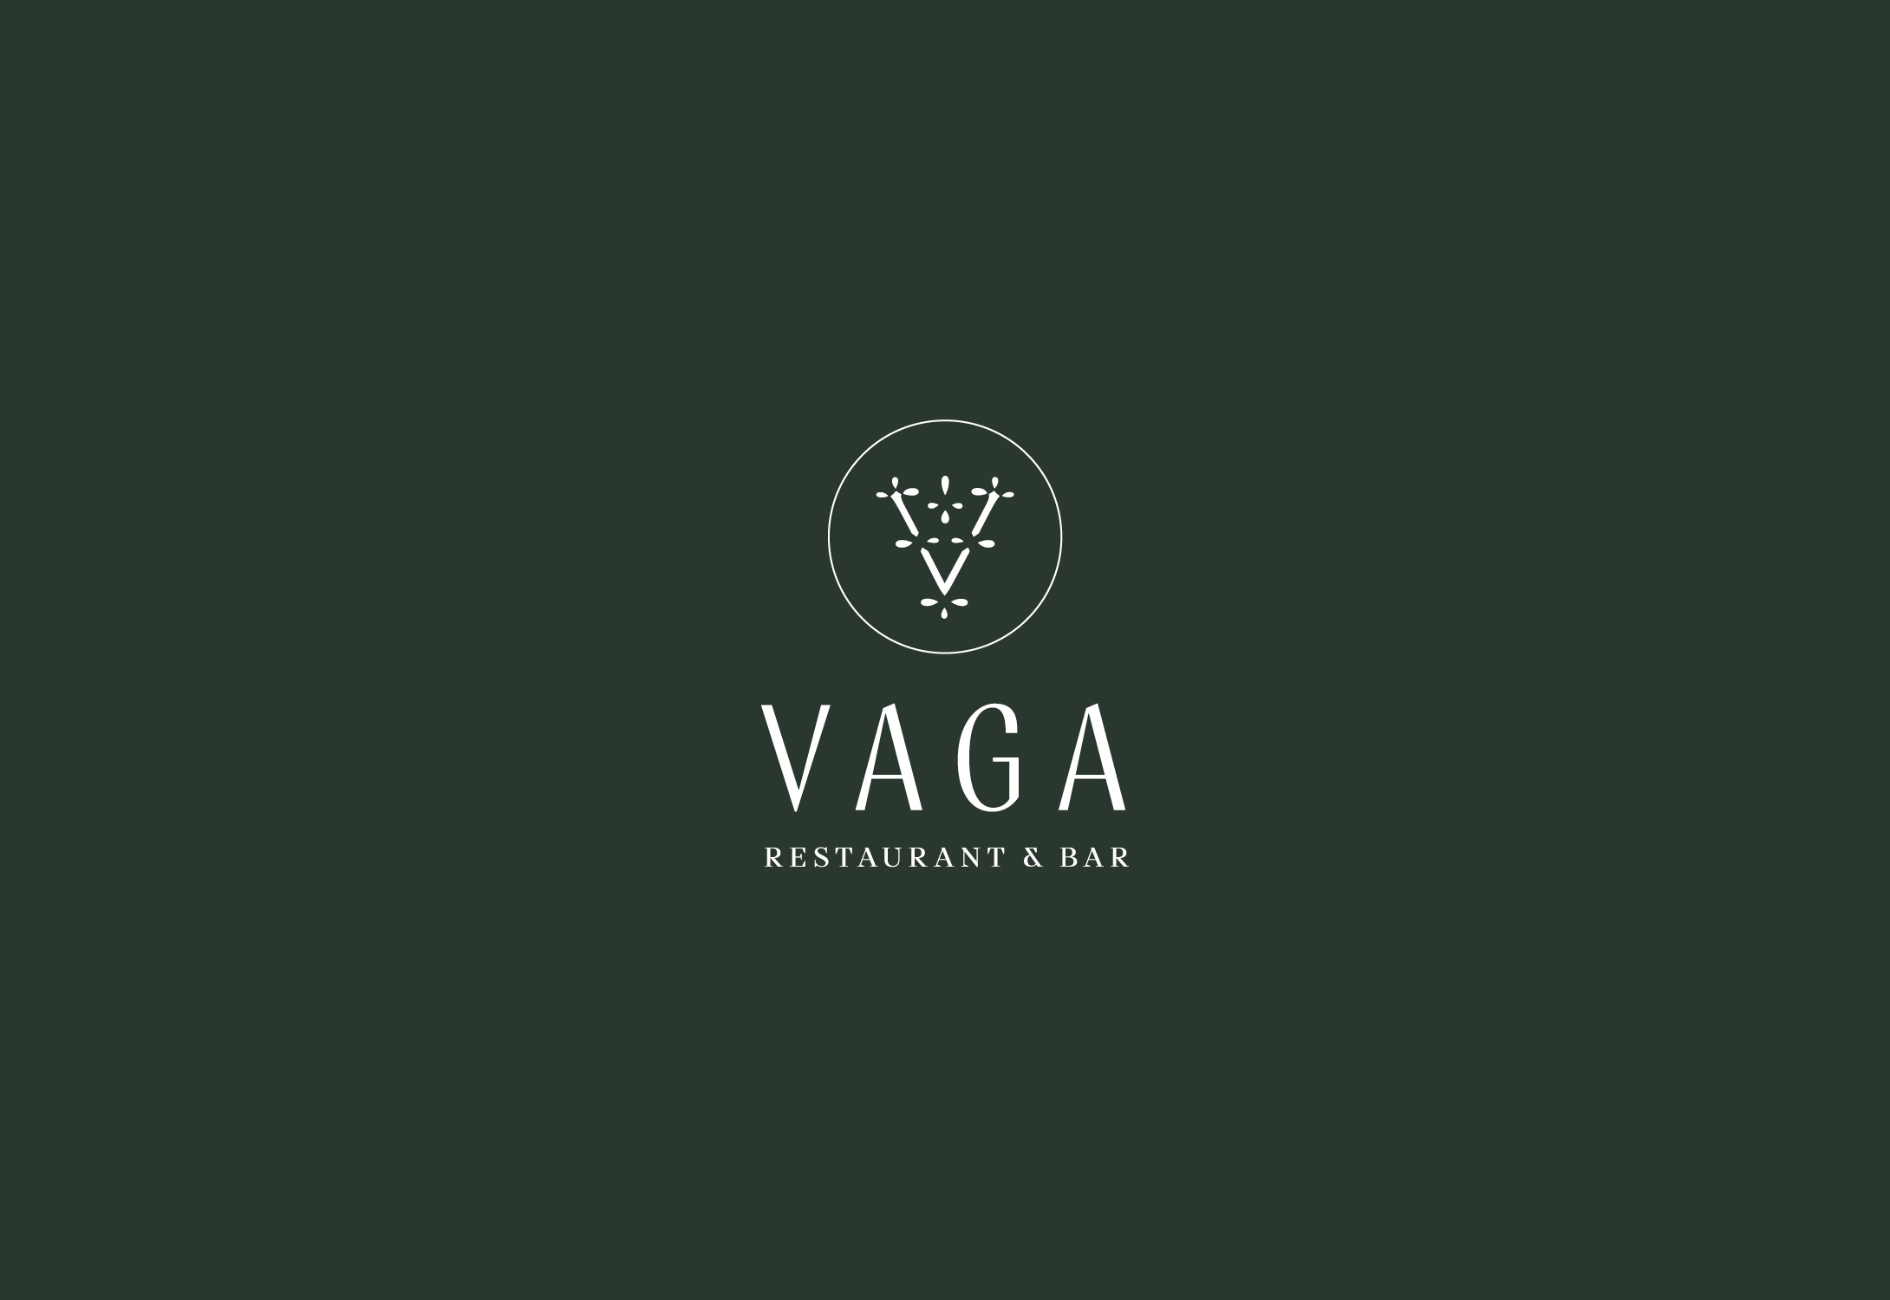 VAGA Restaurant & Bar designed by Mark Zeff